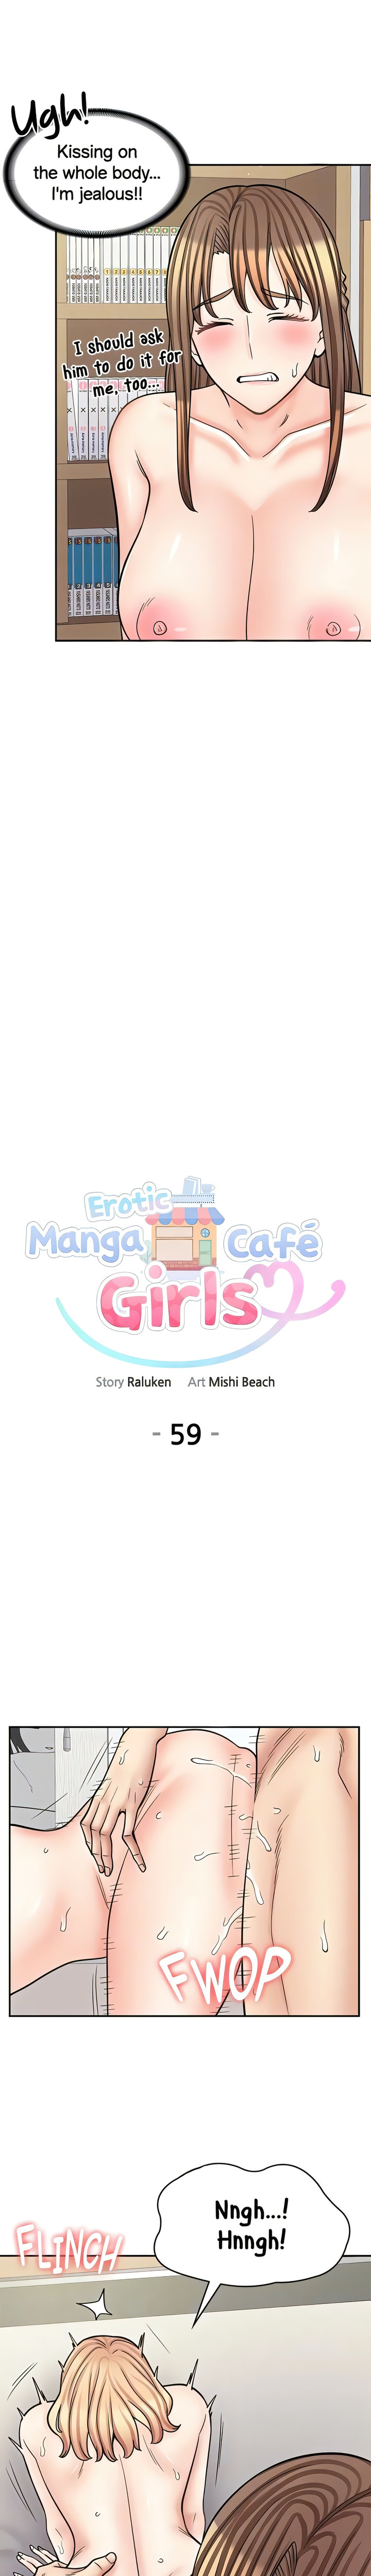 Erotic Manga Café Girls - Chapter 59 Page 7